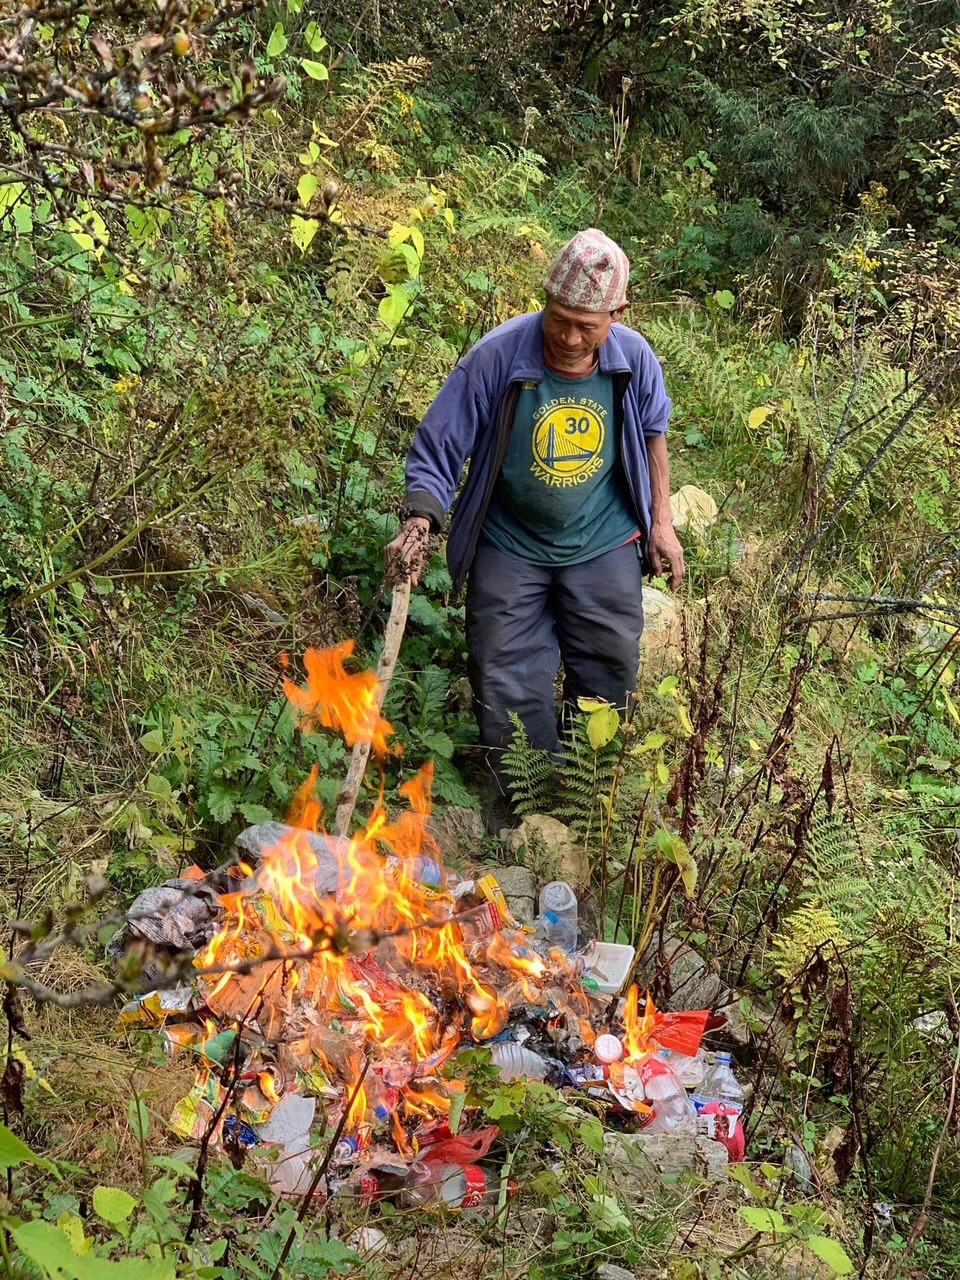 Burning plastic in the Everest region